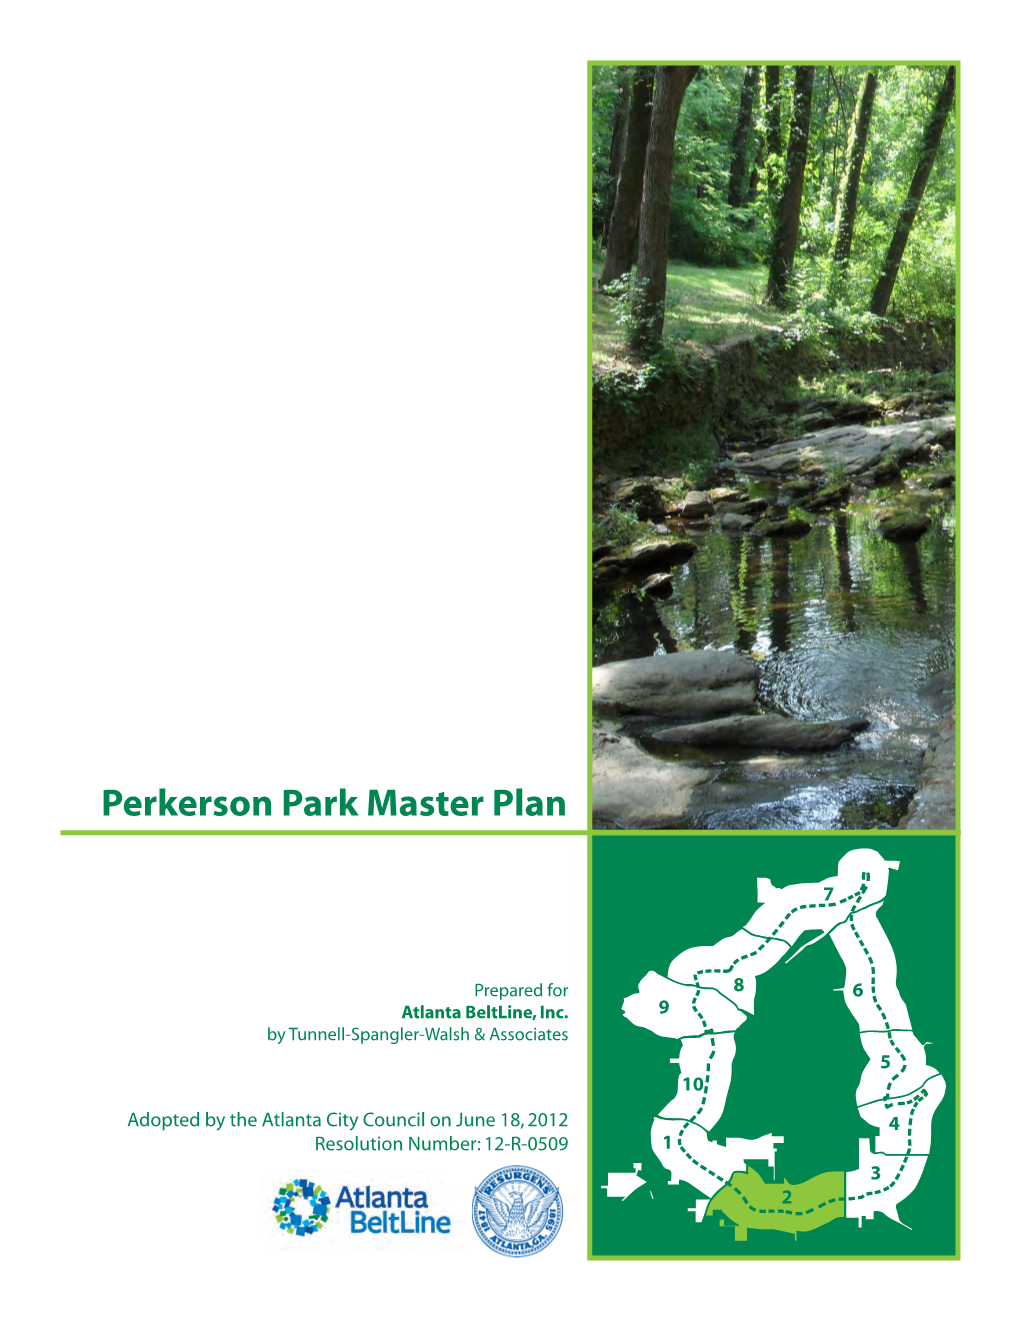 Perkerson Park Master Plan